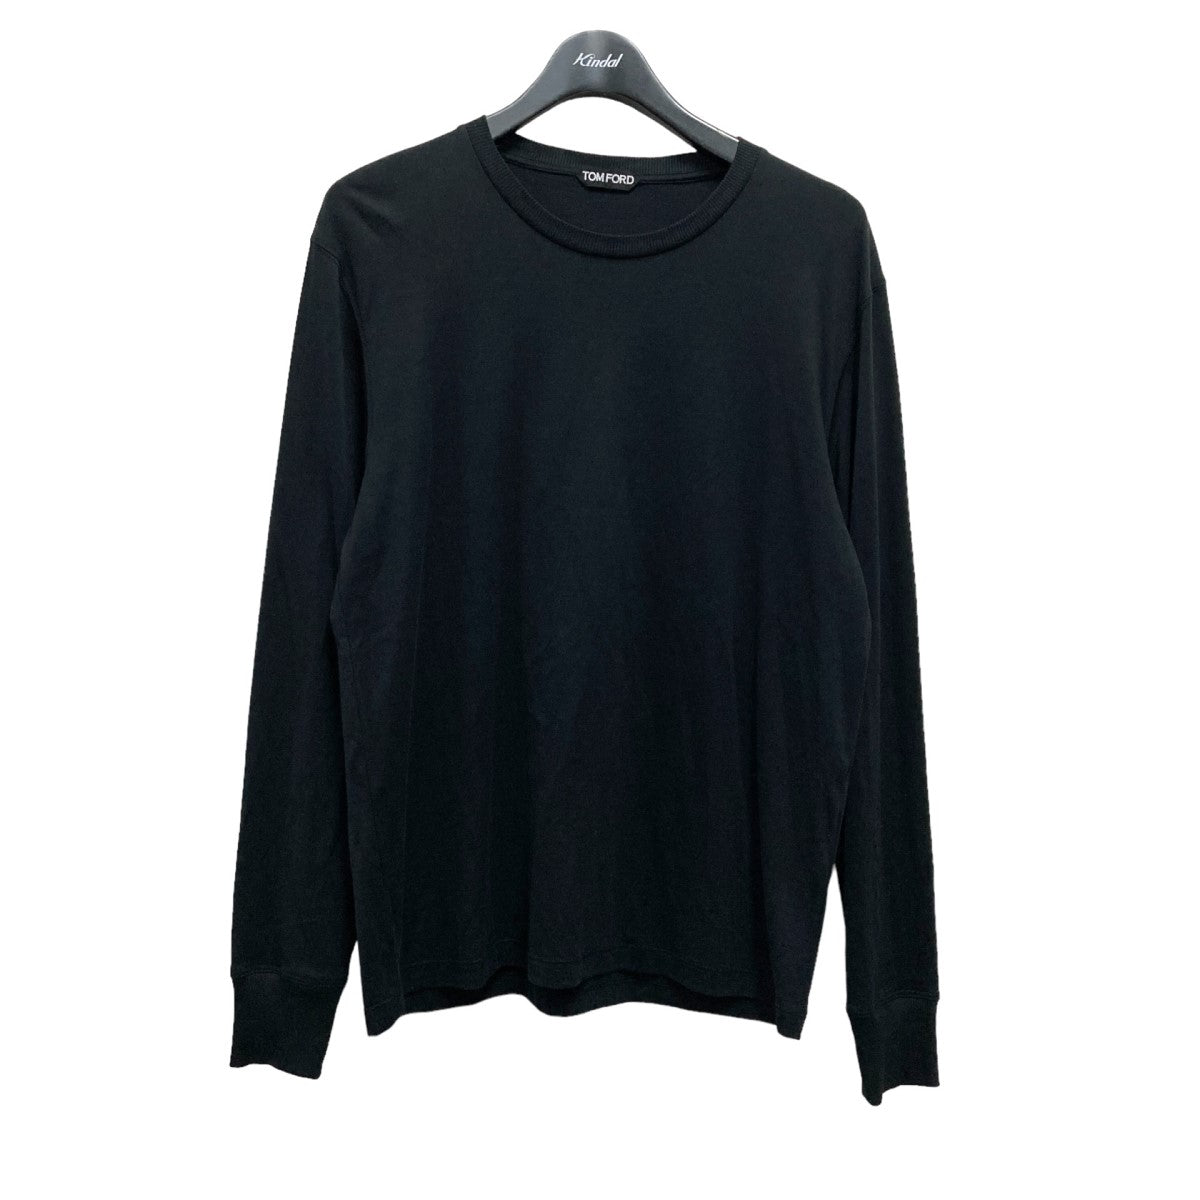 TOM FORD(トムフォード) シルク混長袖Tシャツ ブラック サイズ 15 